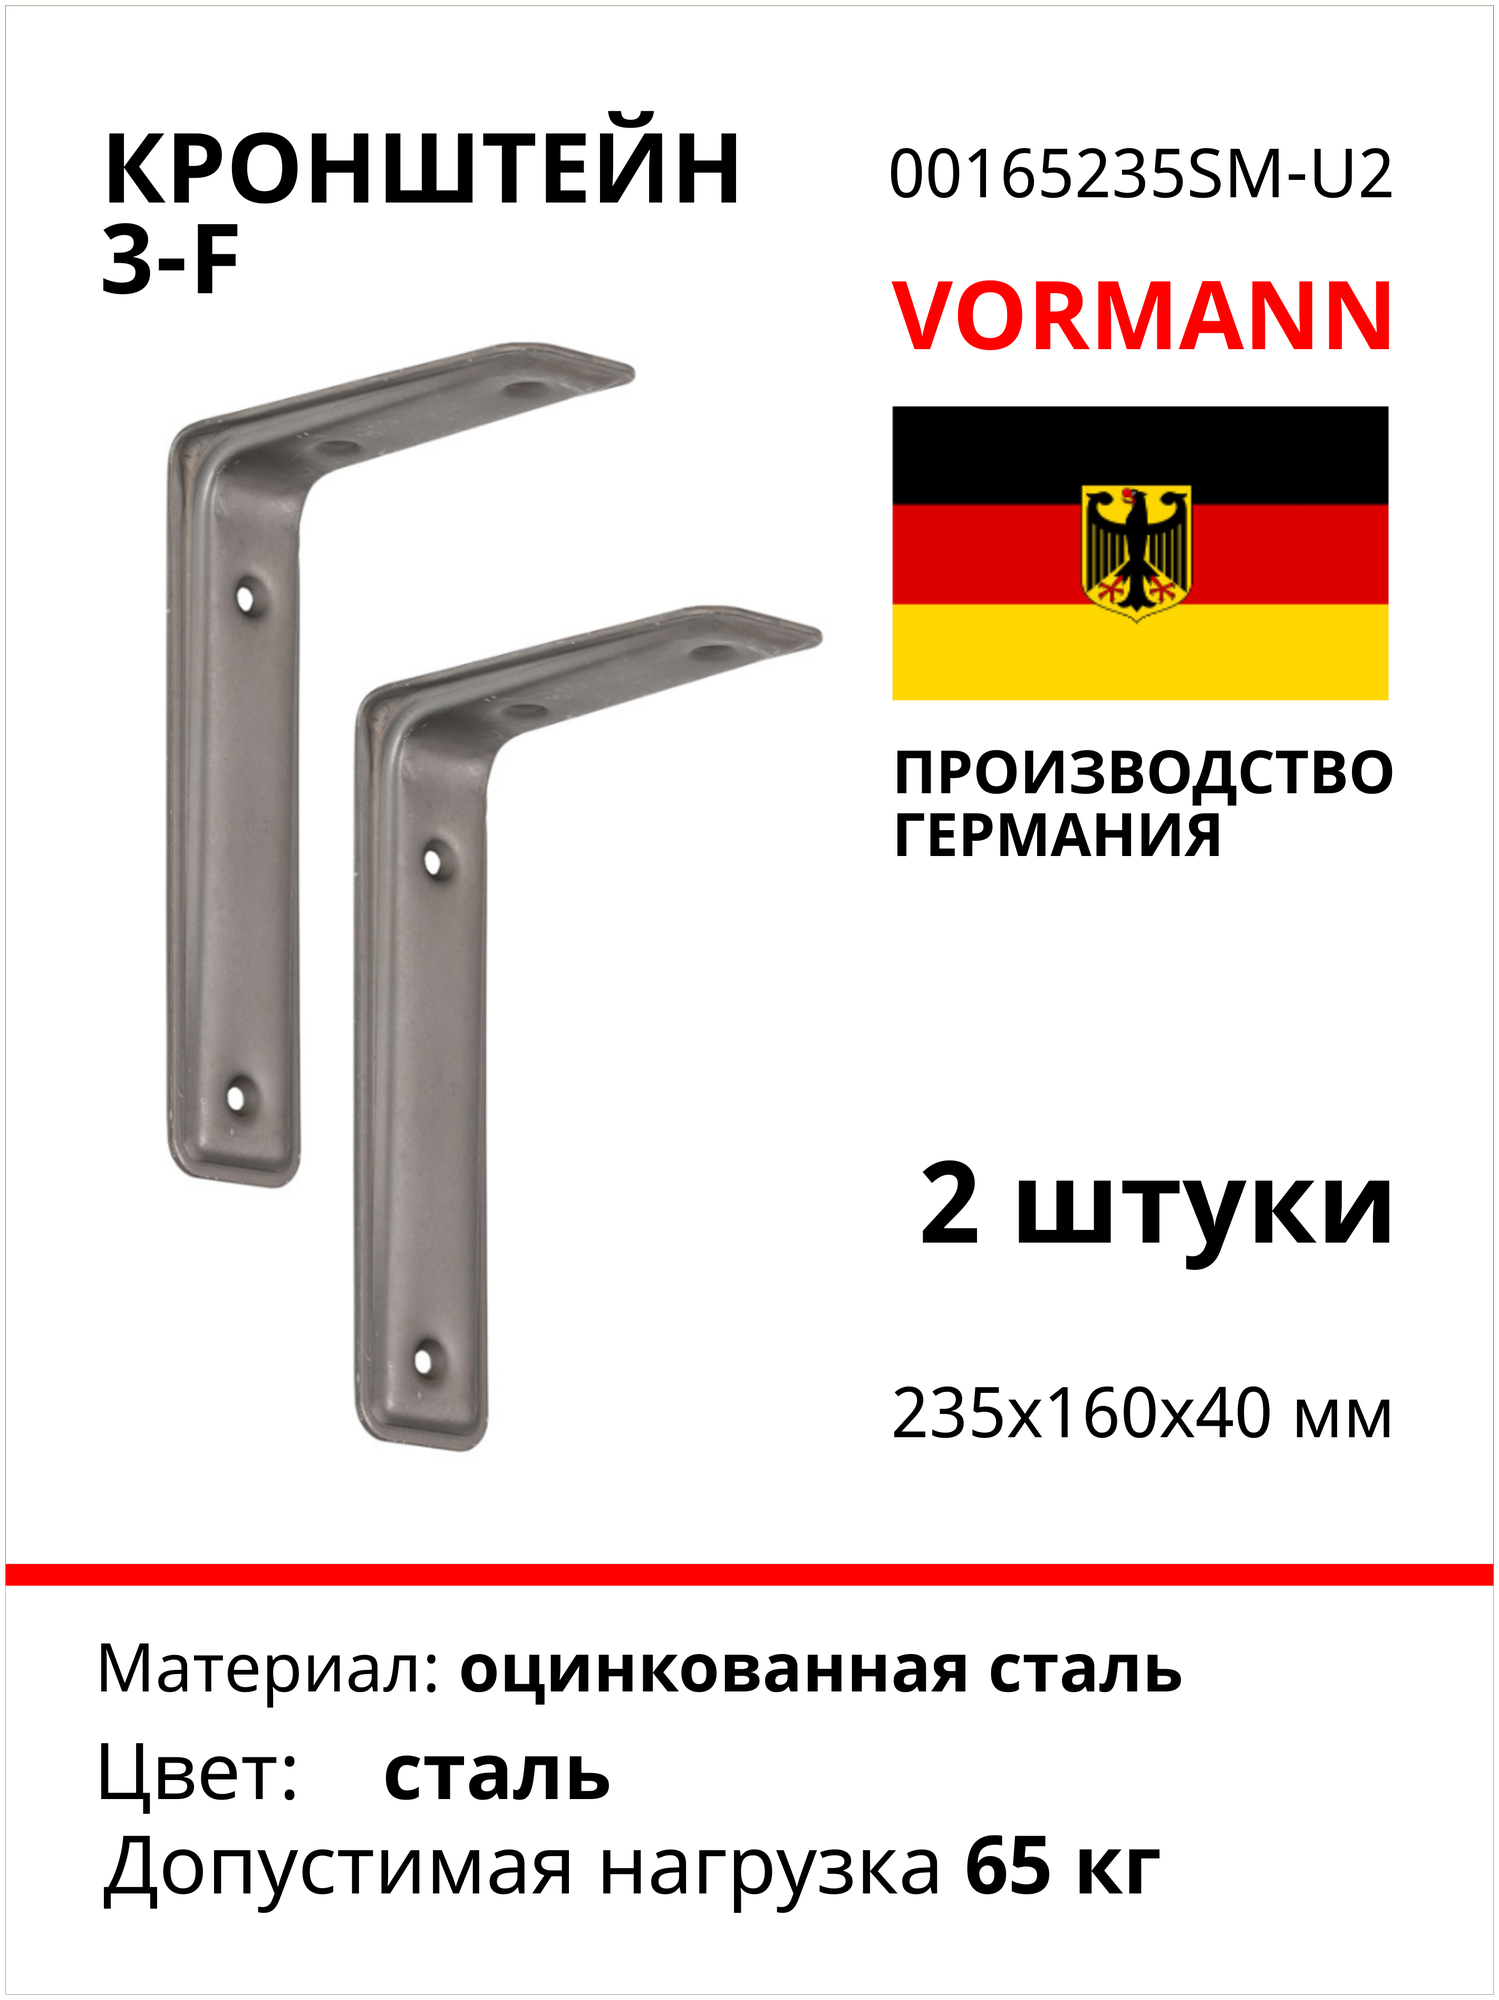 Кронштейн Vormann 3-F 235х160х40 мм, оцинкованный, цвет: сталь, 65 кг, 2 шт, 00165 235 SM_U2